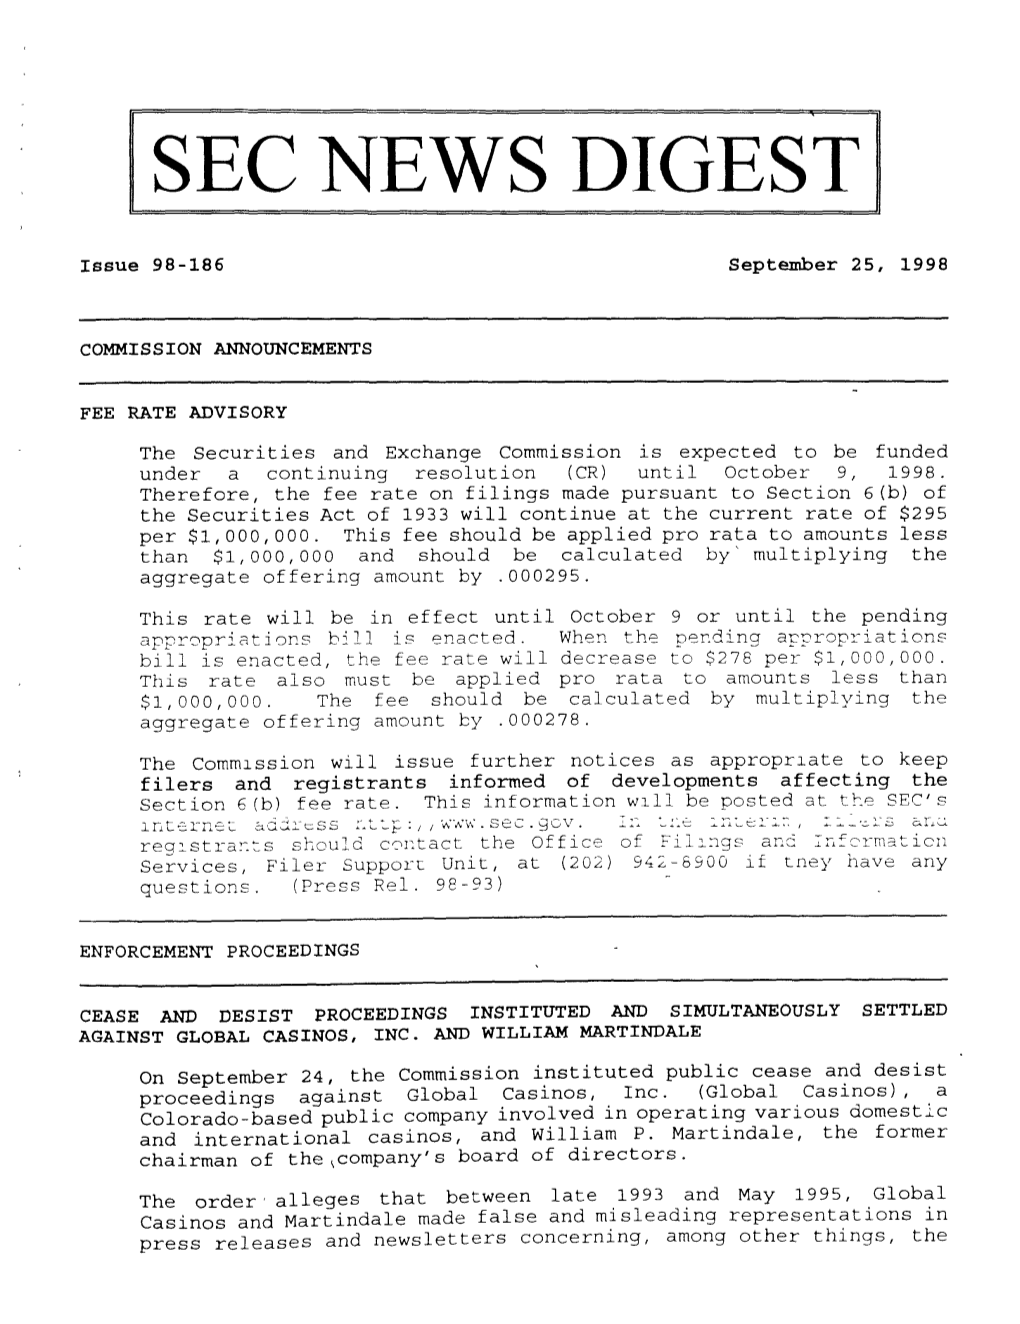 SEC News Digest, 09-25-1998